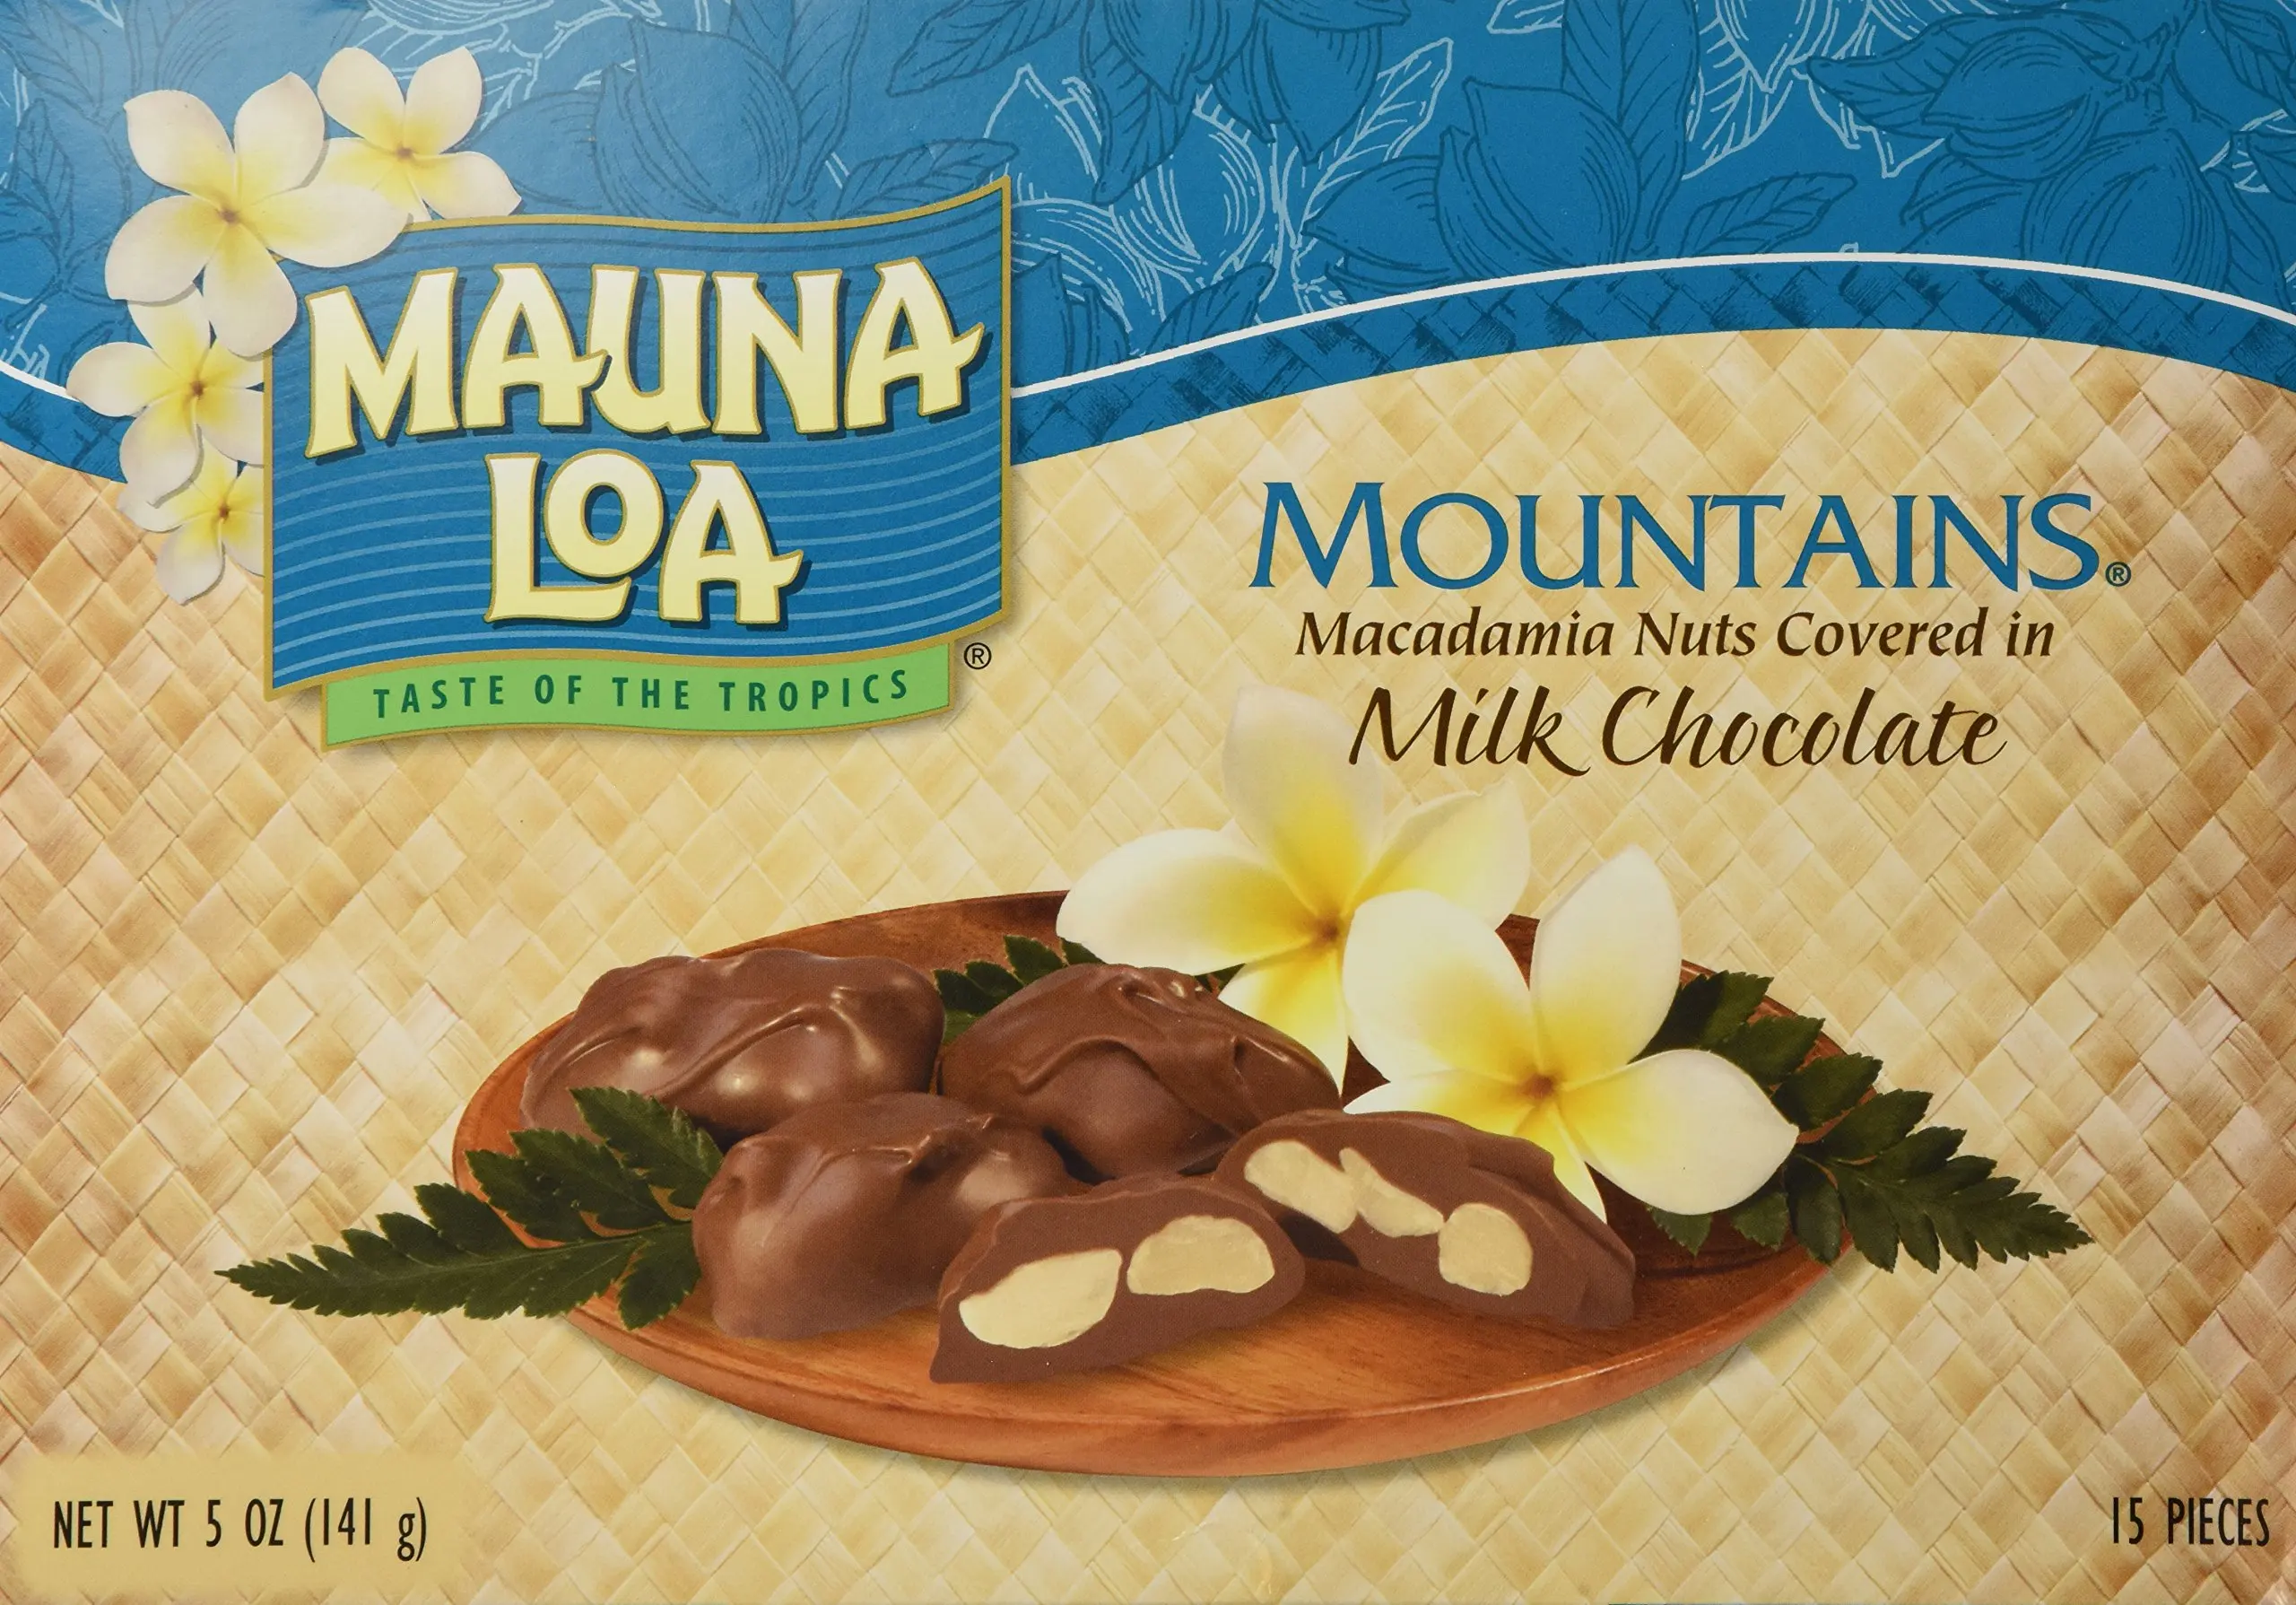 Mauna Loa Chocolate Macadamia Nuts Gift Box 8 oz PACK OF 6. Mauna Loa Mount...